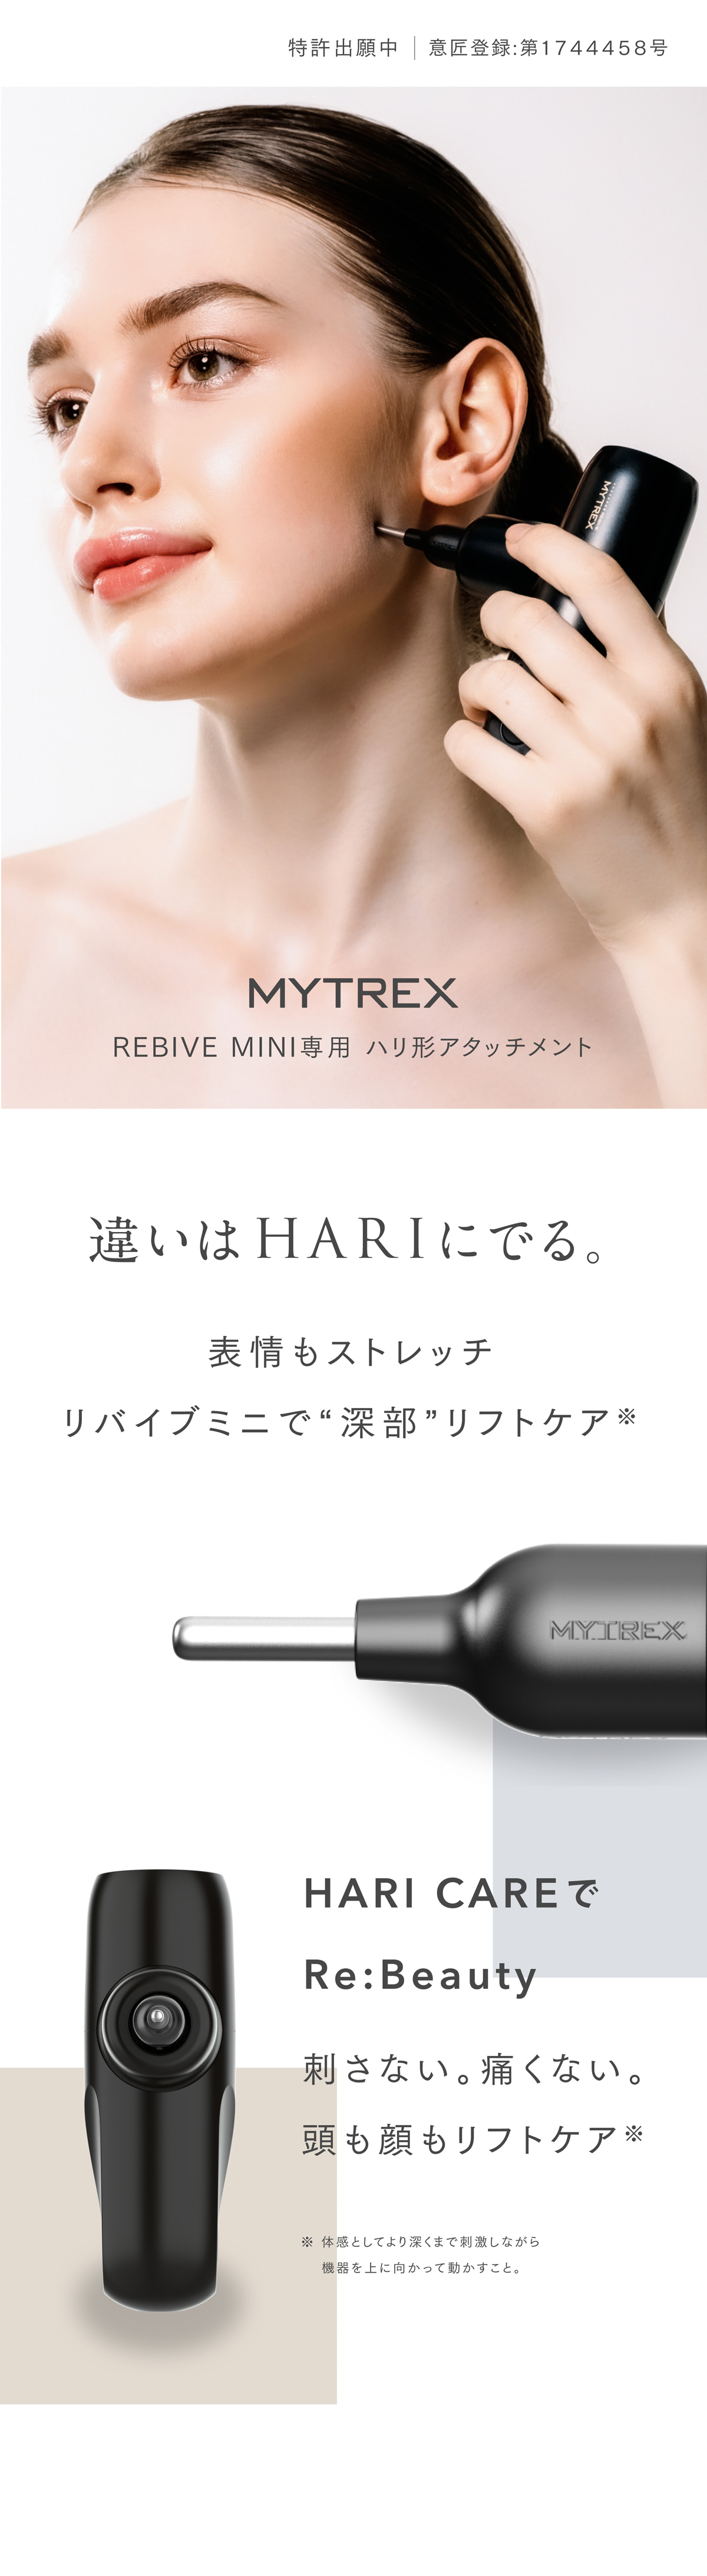 MYTREX REBIVE MINI xs  マイトレックスリバイブミニ　ハリ型